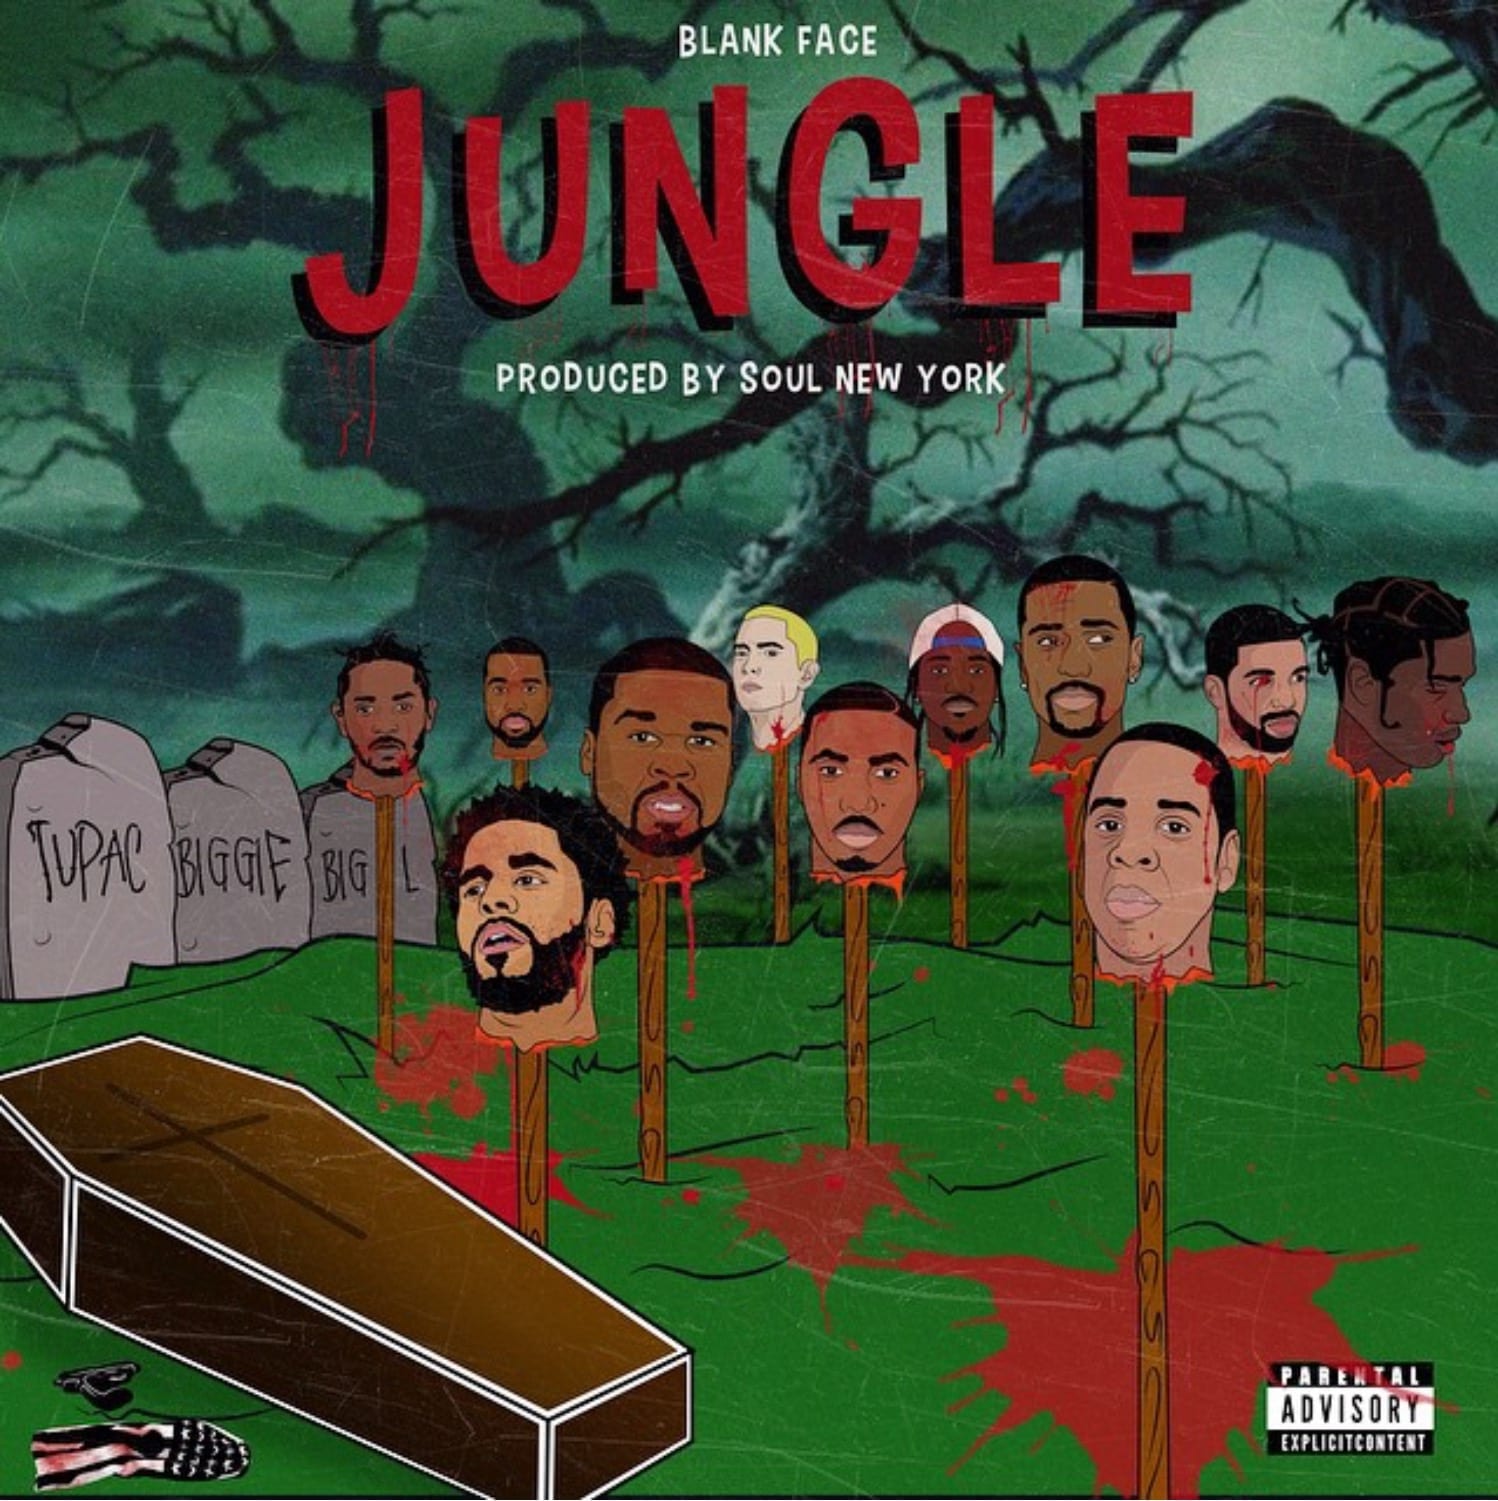 Black Face - "Jungle"